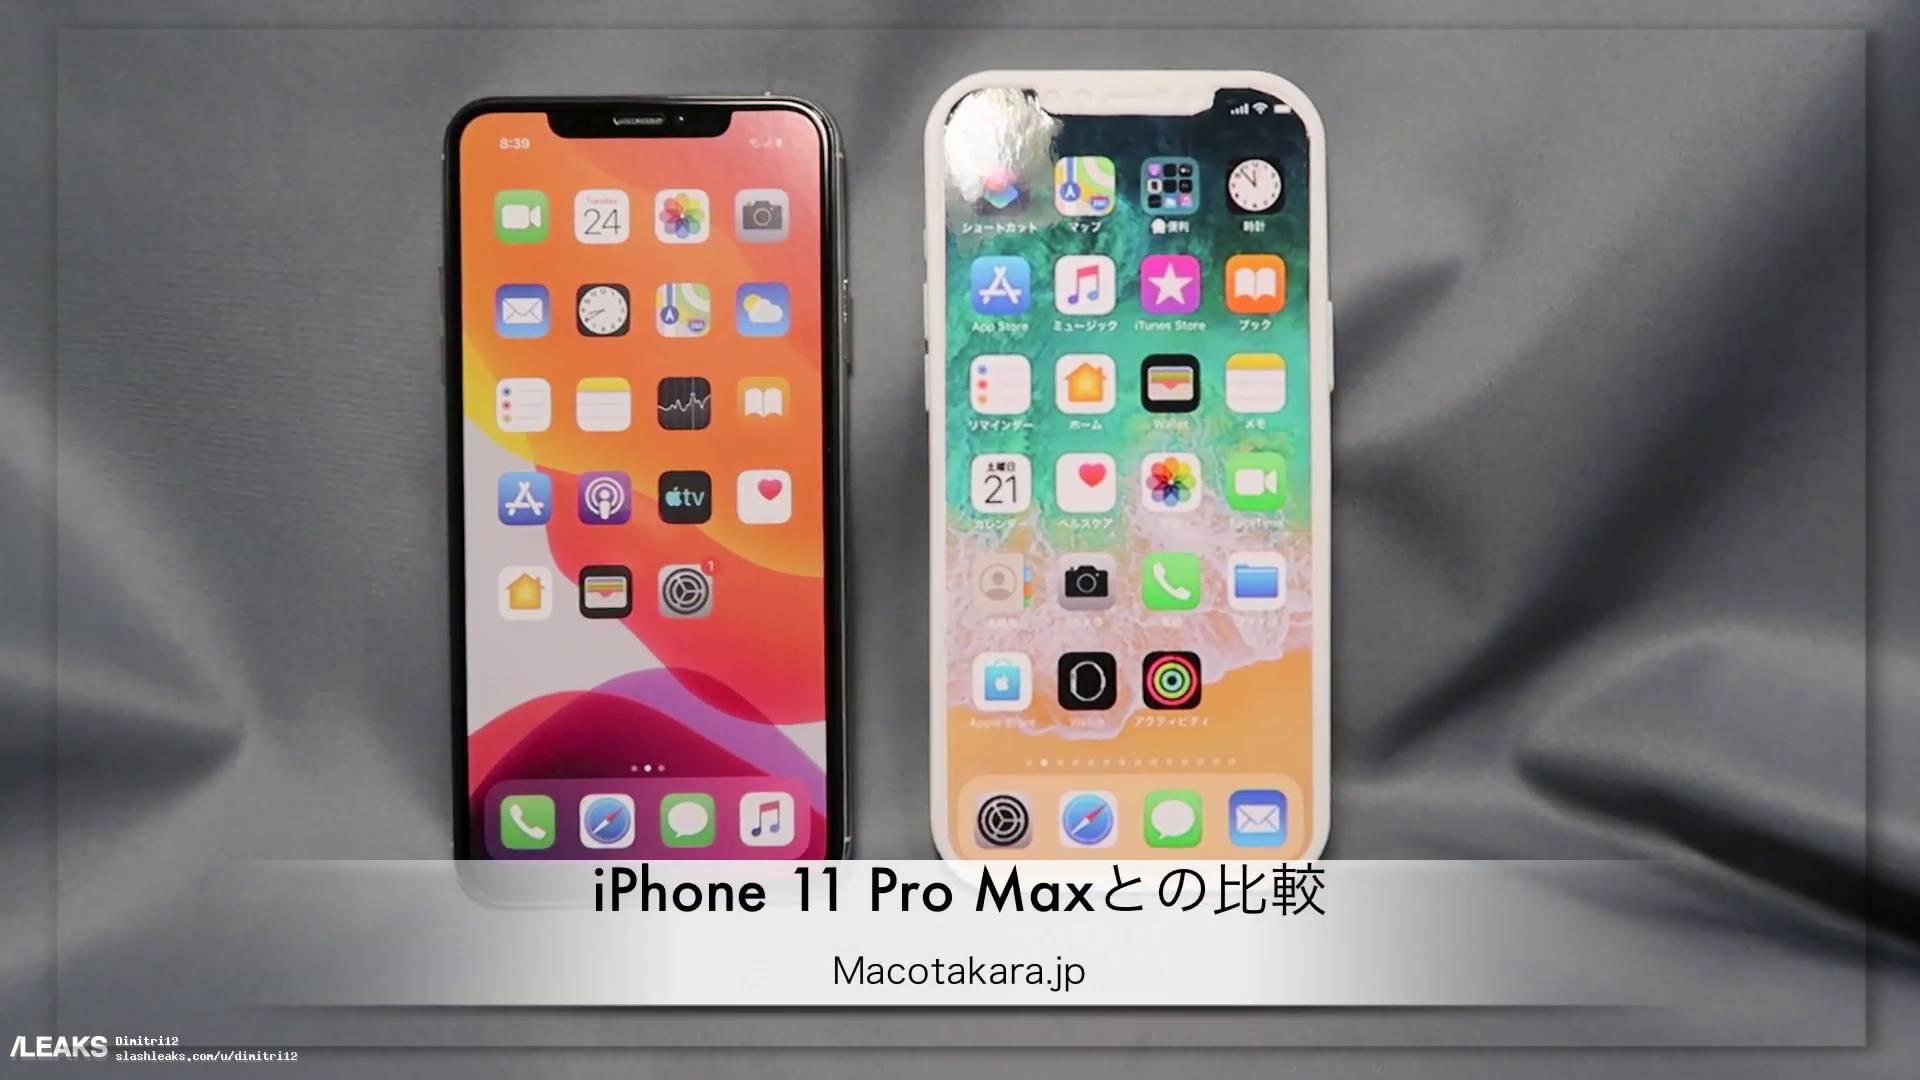 iphone 12 pro max model 2